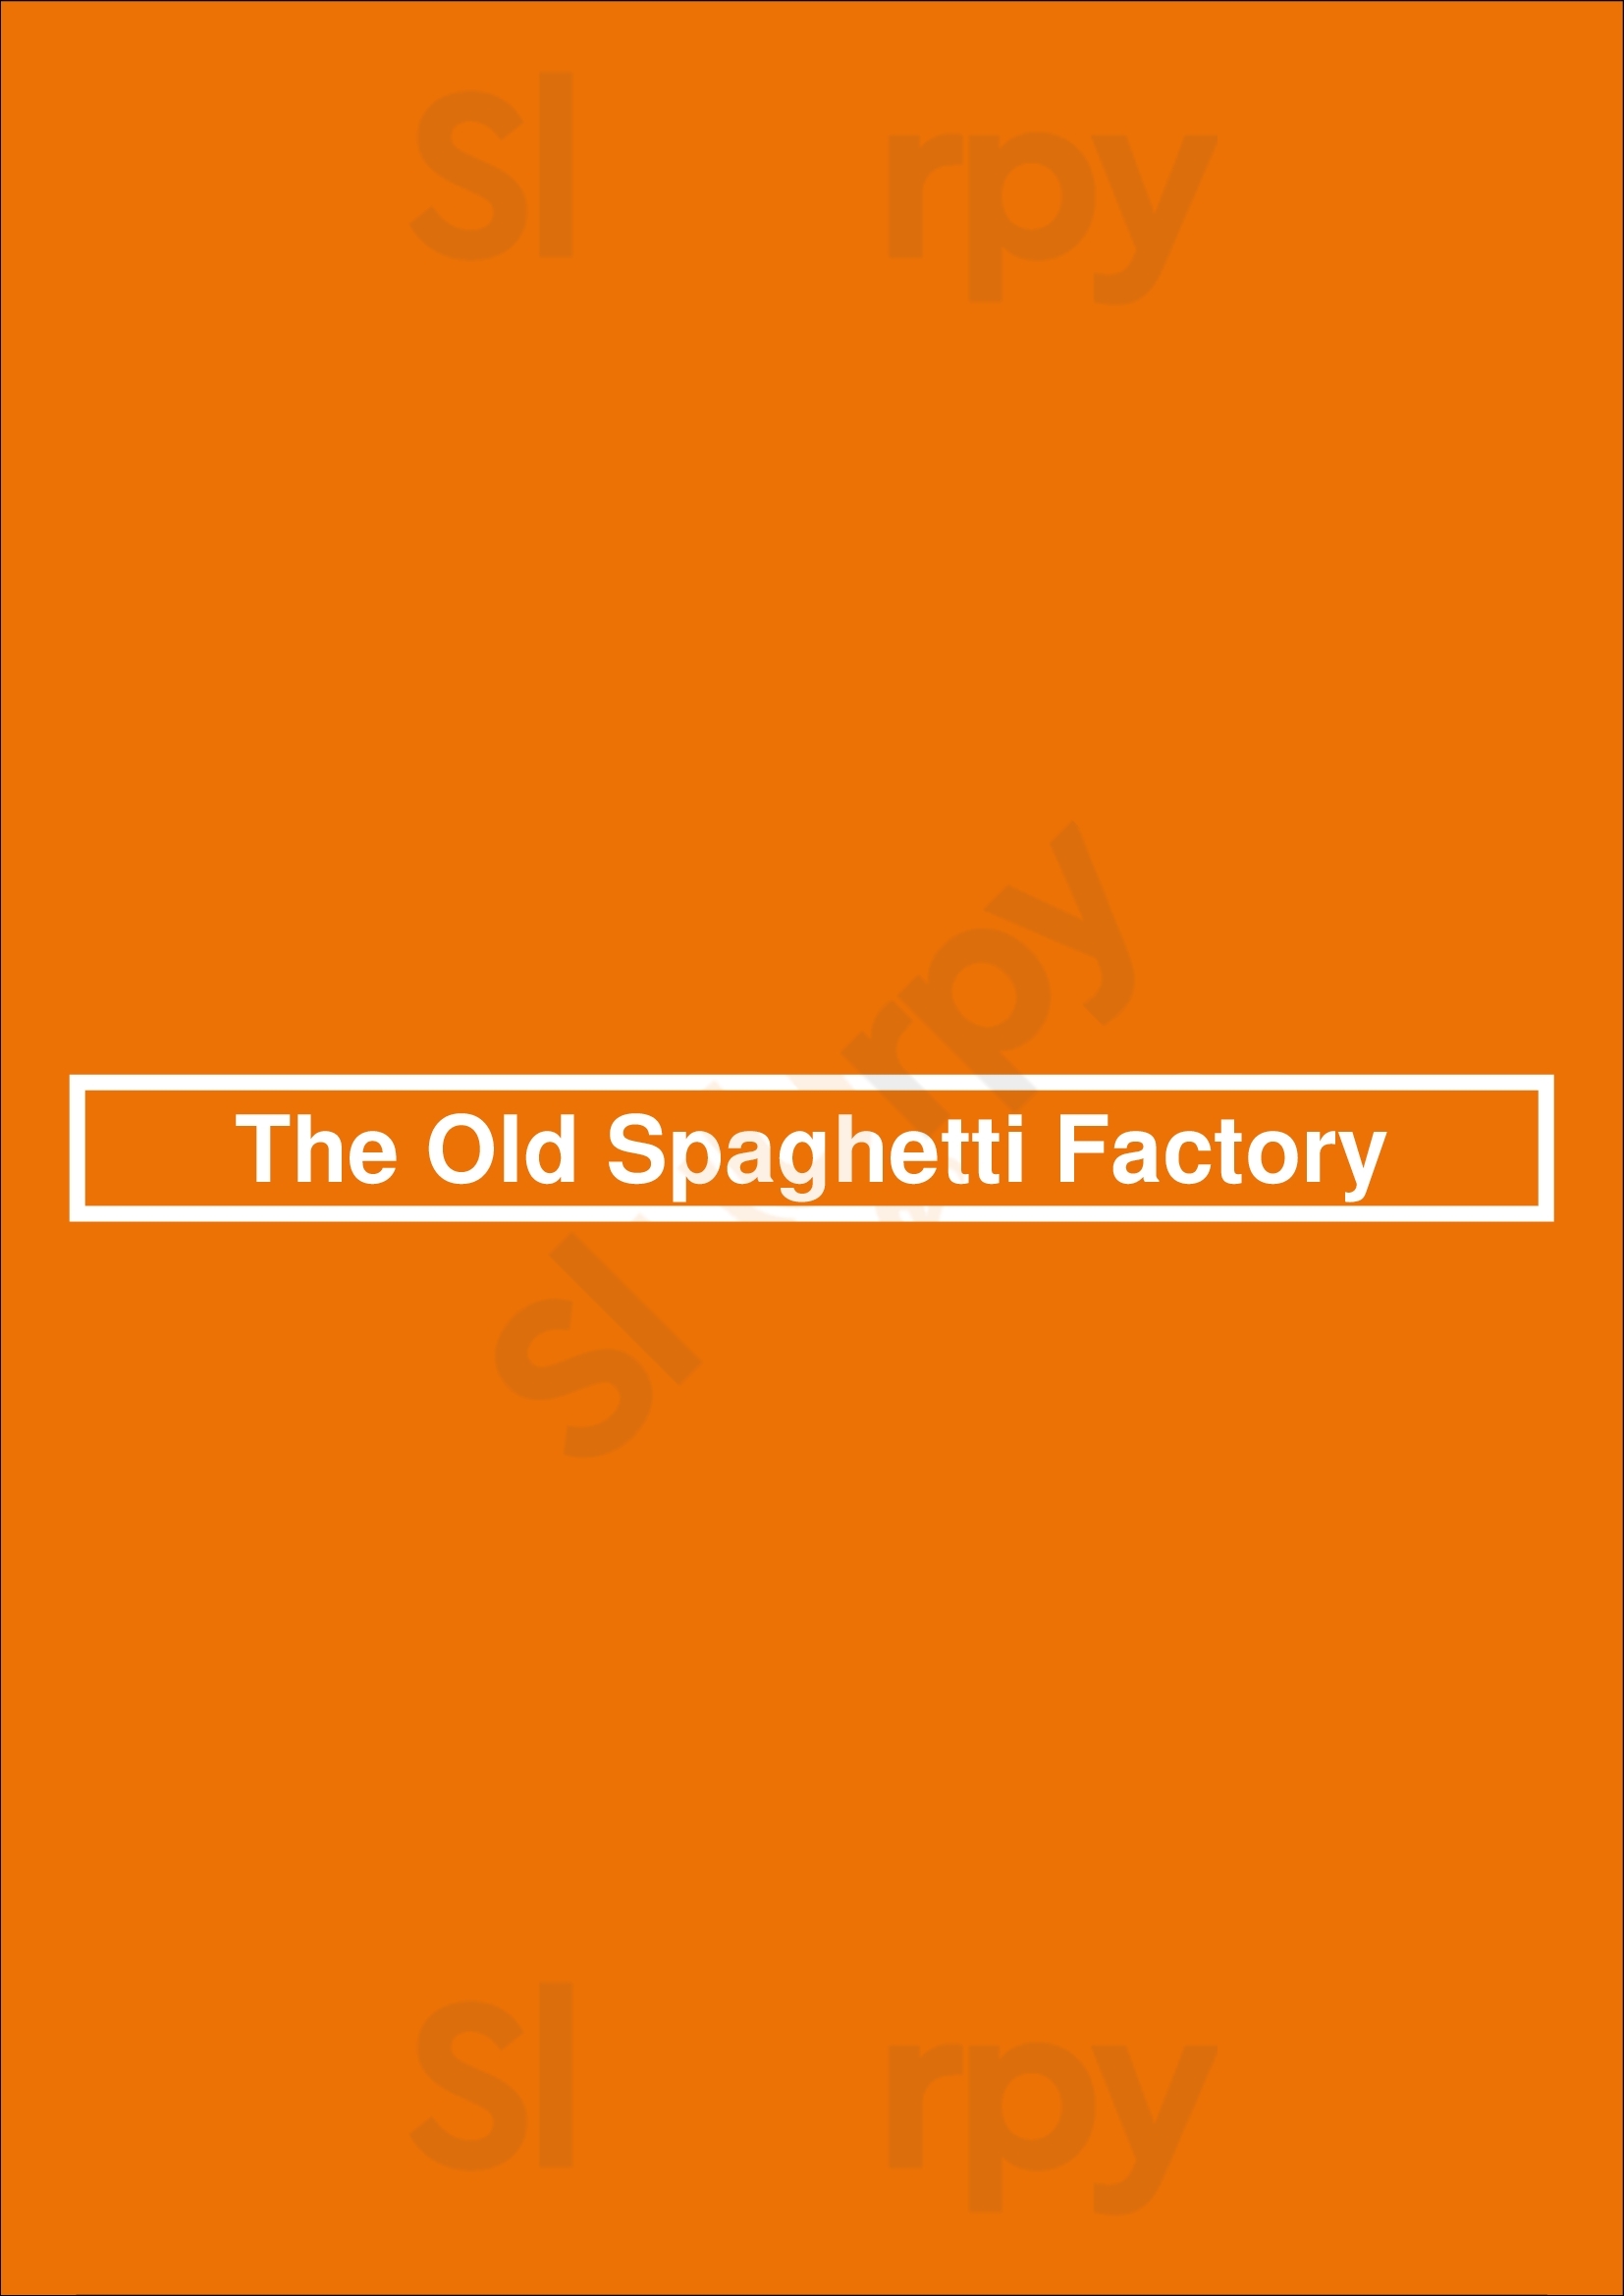 The Old Spaghetti Factory Winnipeg Menu - 1